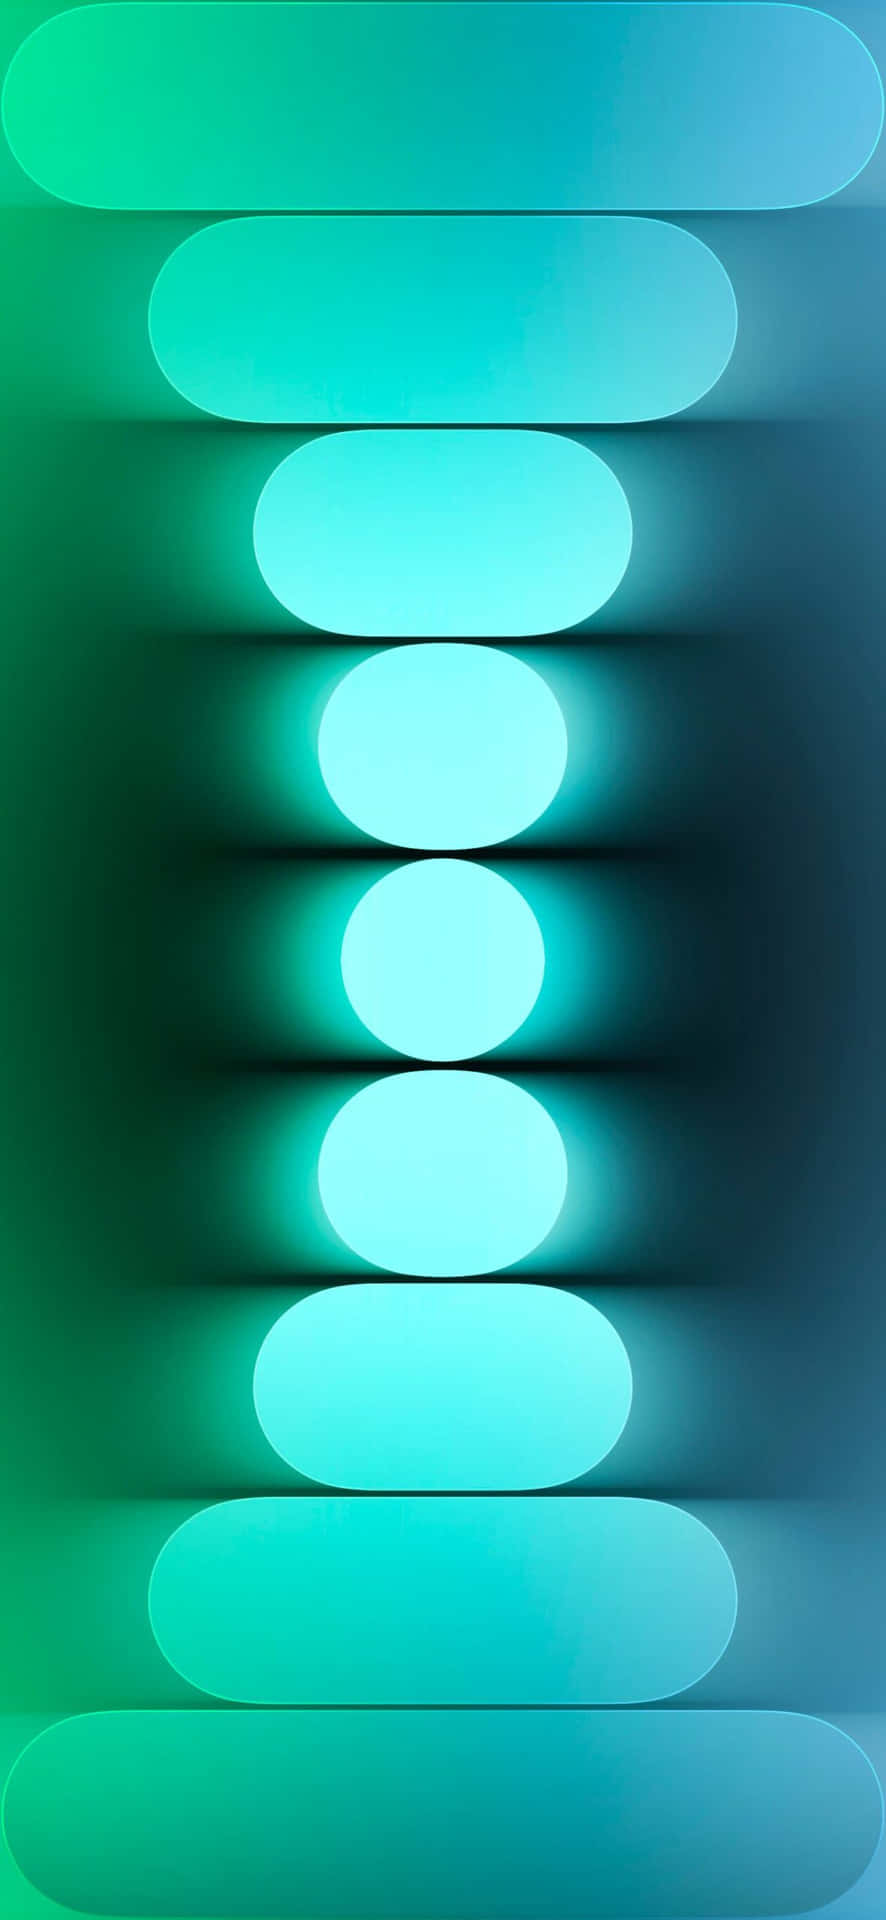 Abstract Blue Green Light Background Wallpaper